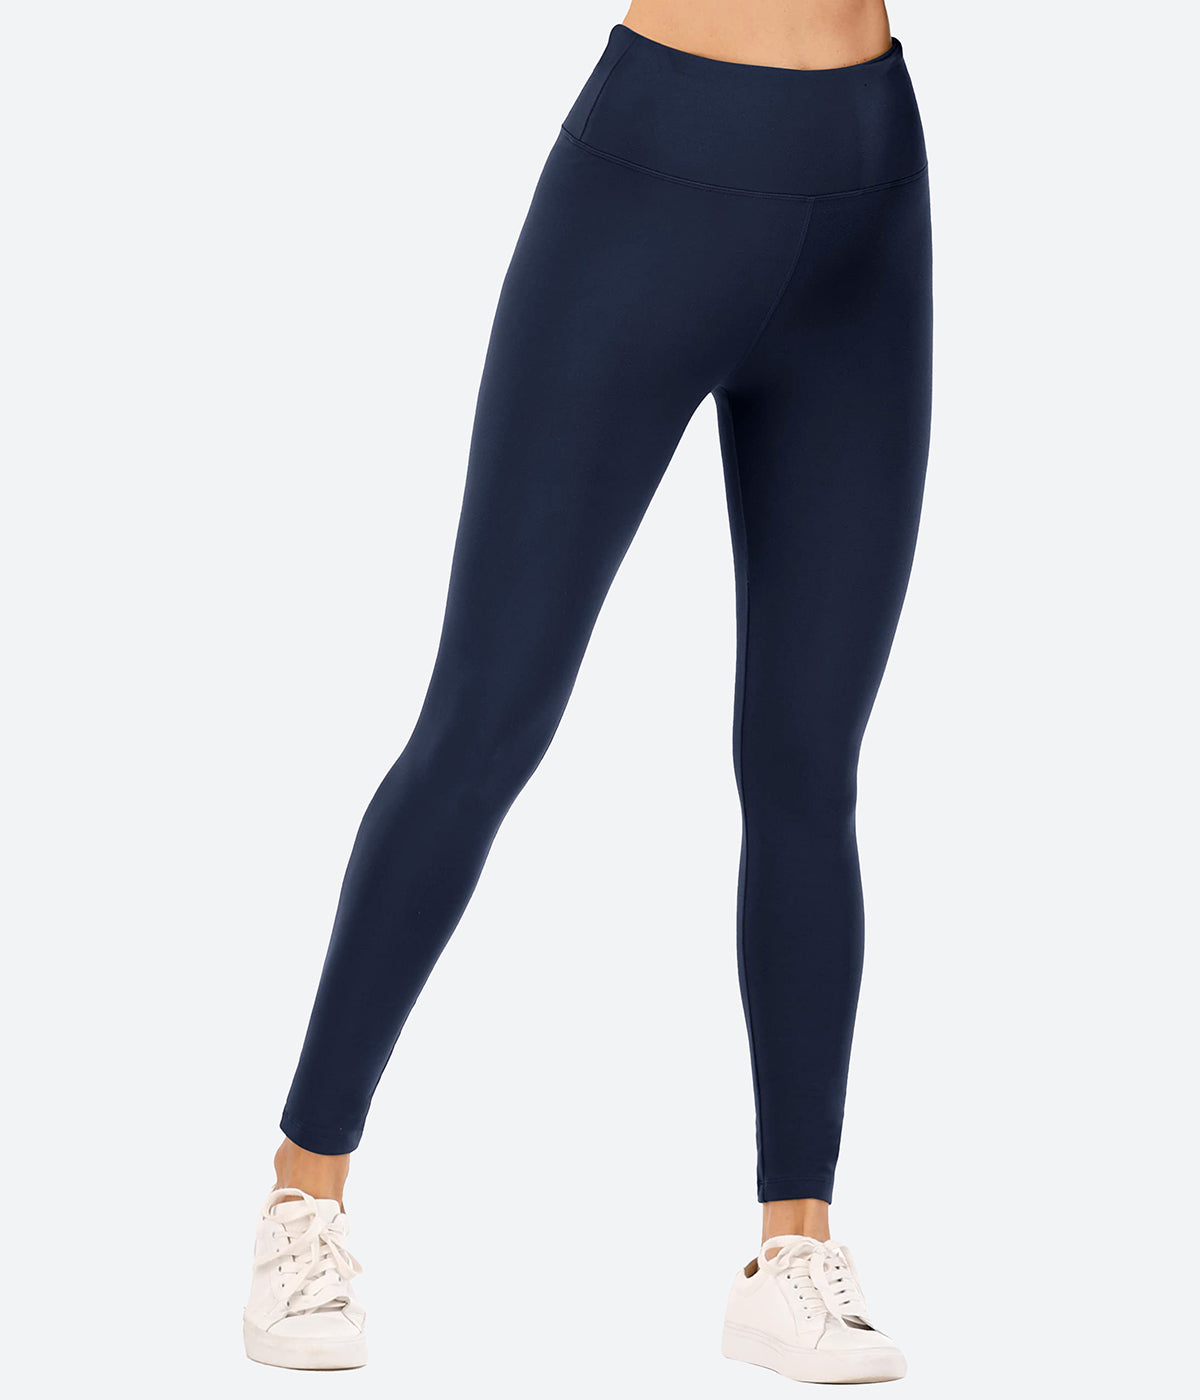 Joy Lab Women's Leggings Yoga Pants Size XS Blue, Leg Ties (B46)